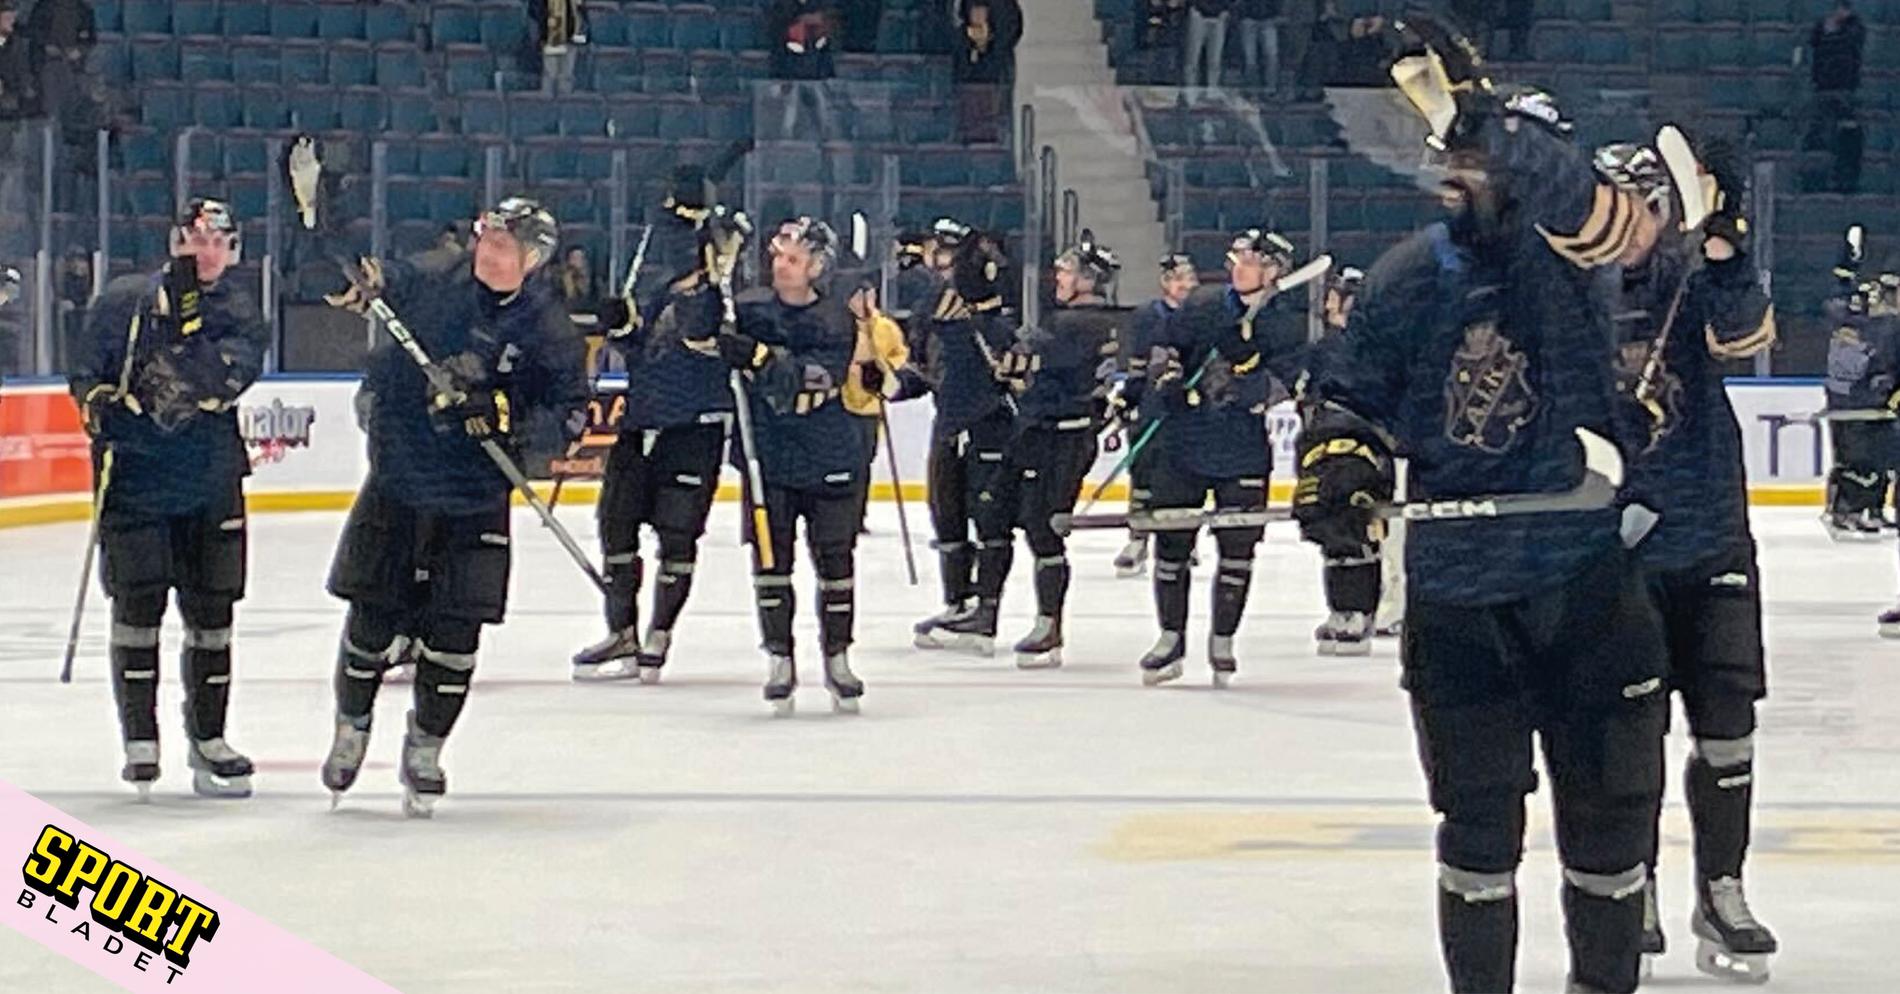 AIK hetast i hockeyallsvenskan – tog femte raka